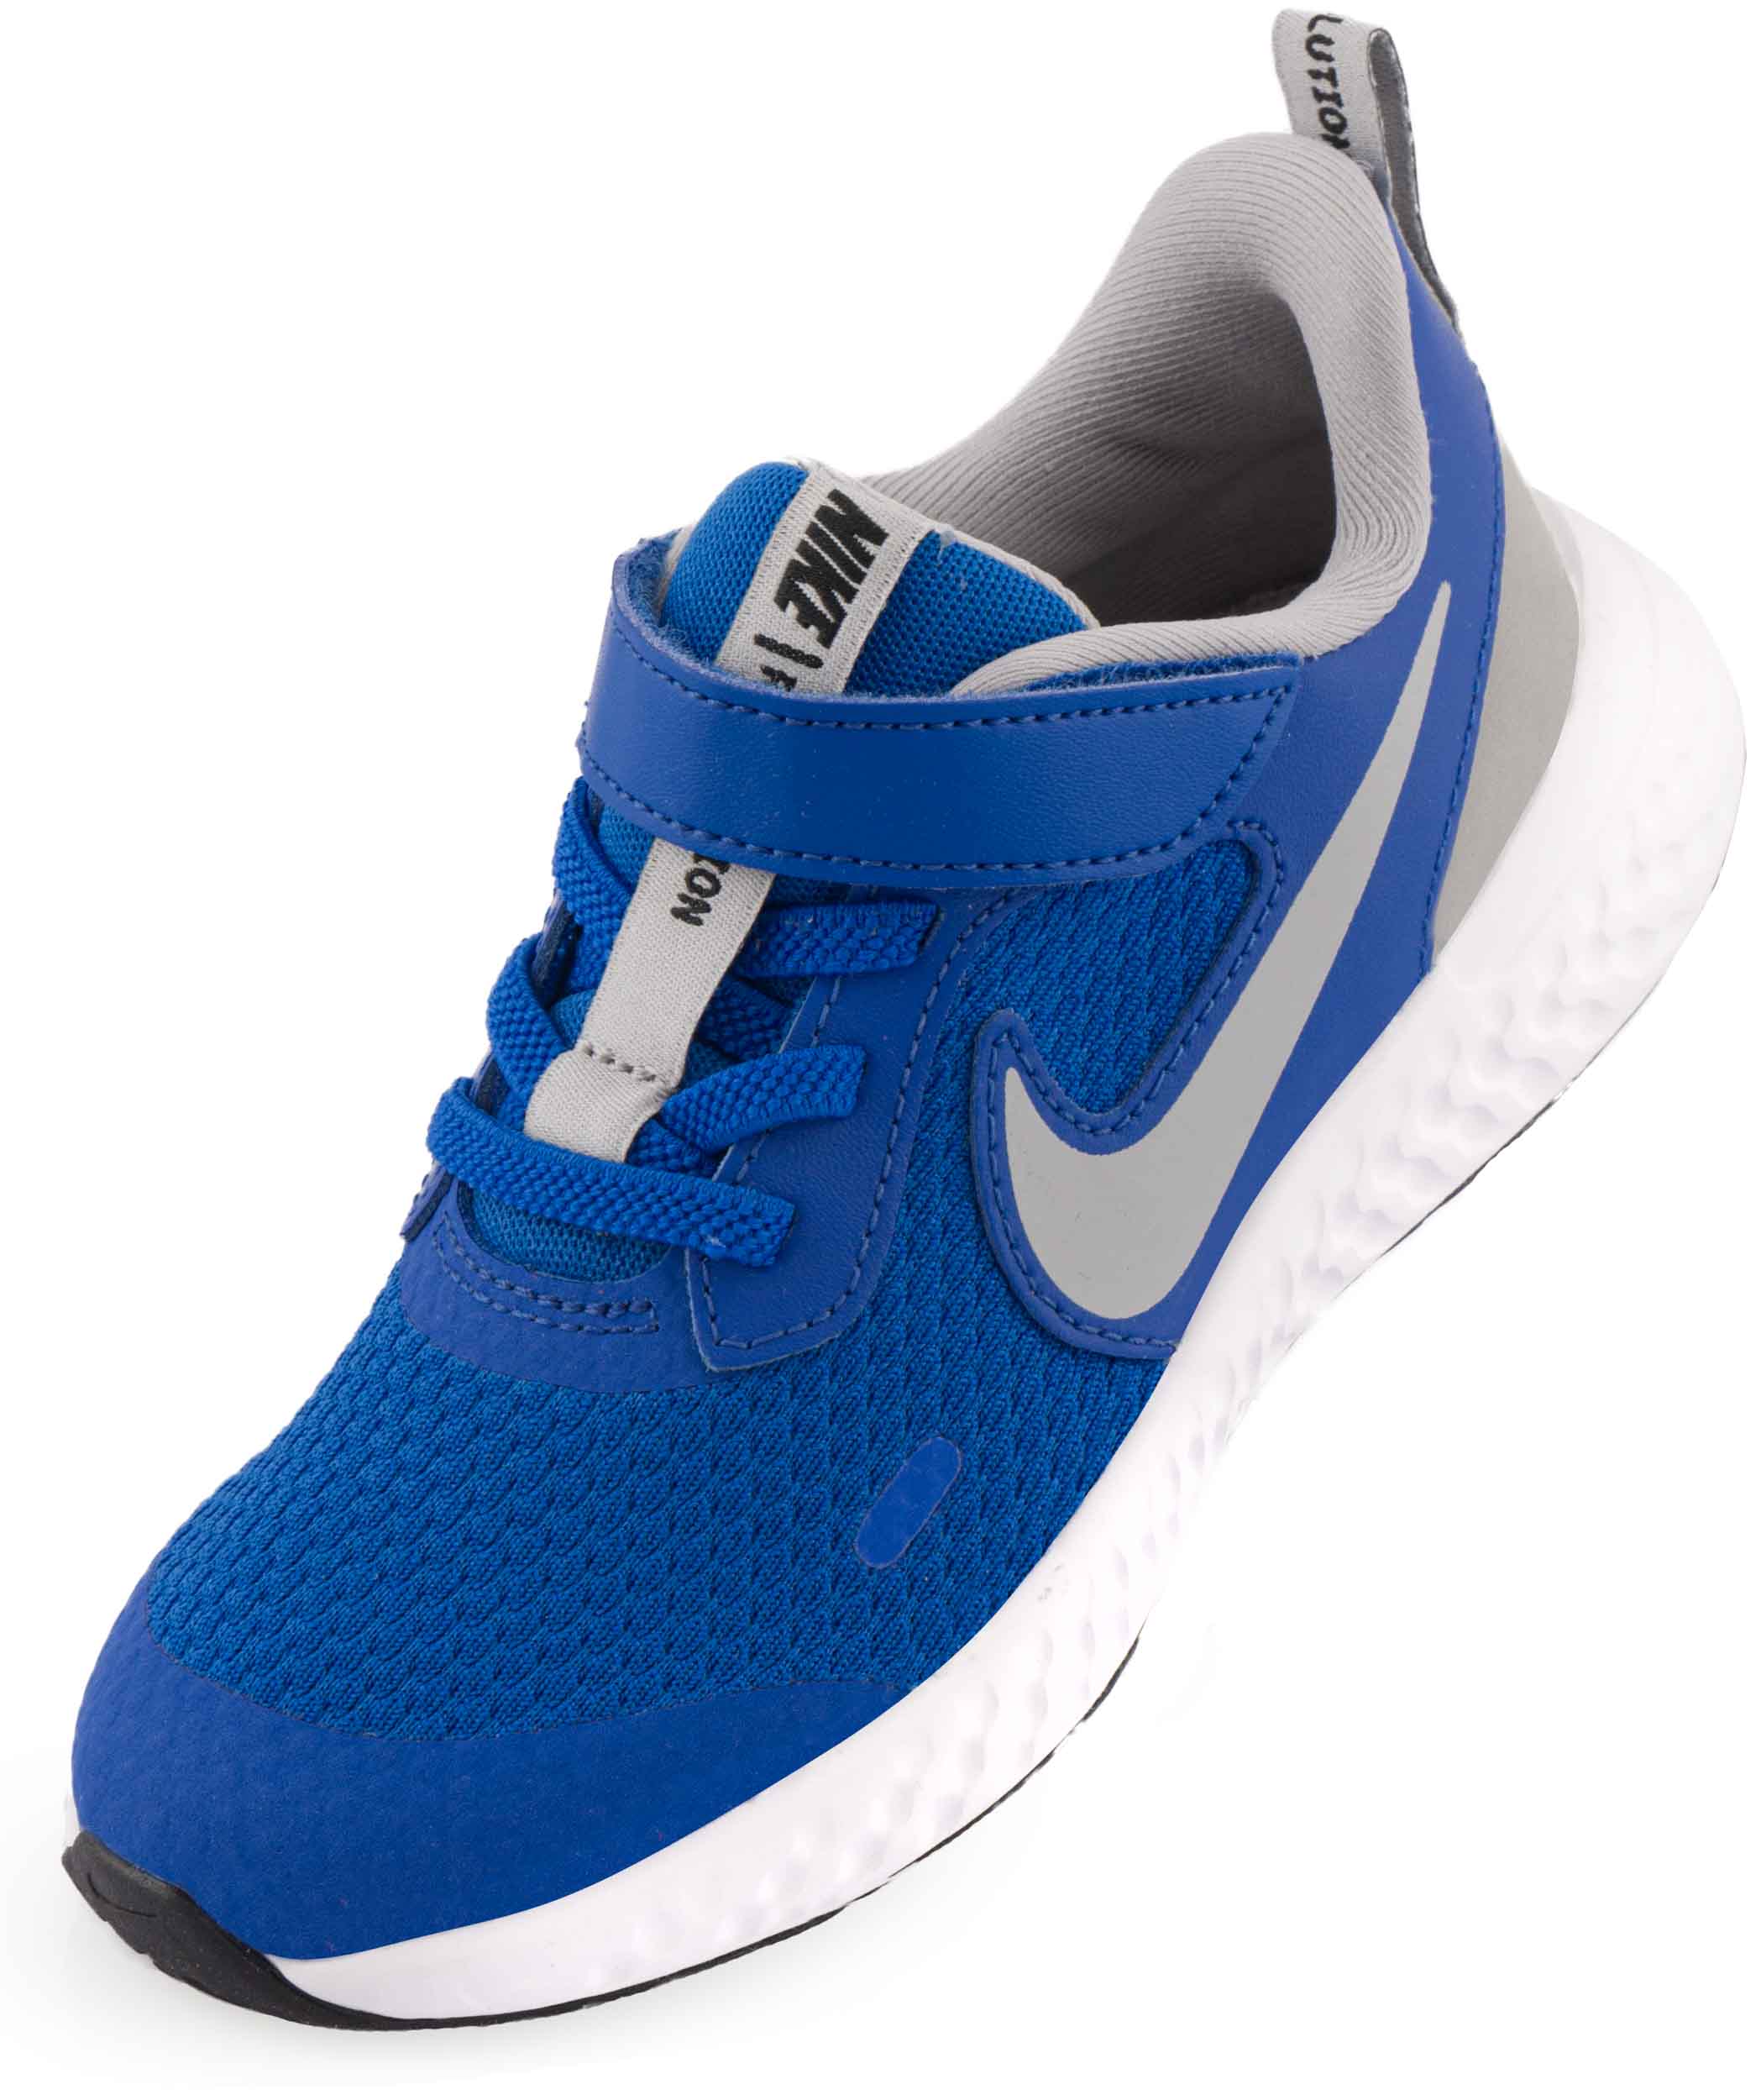 Dětská obuv Nike Jr Revolution 5 Royal Blue/Grey/White|27,5